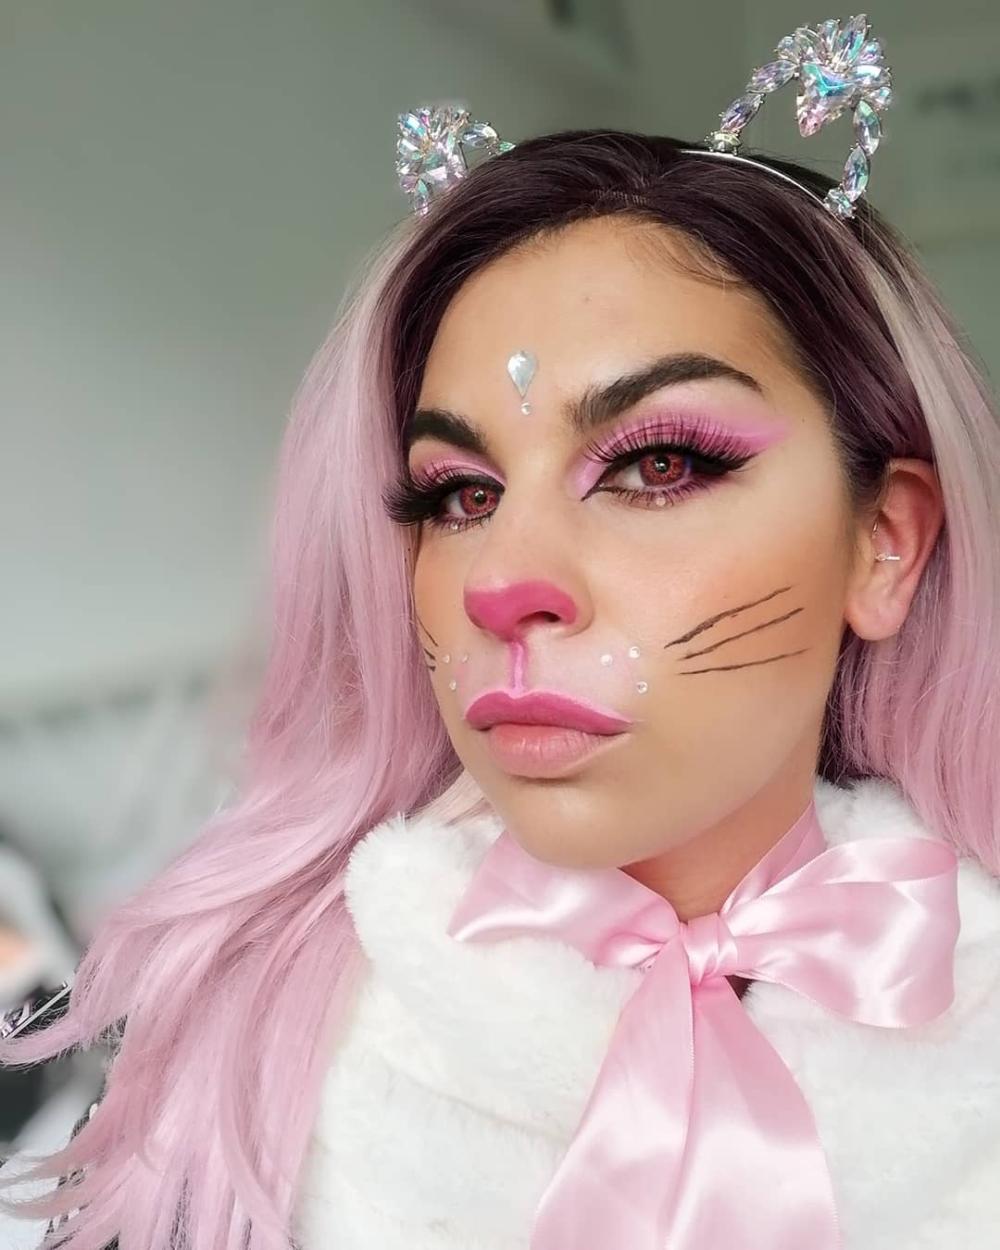 Pink cat halloween makeup for women